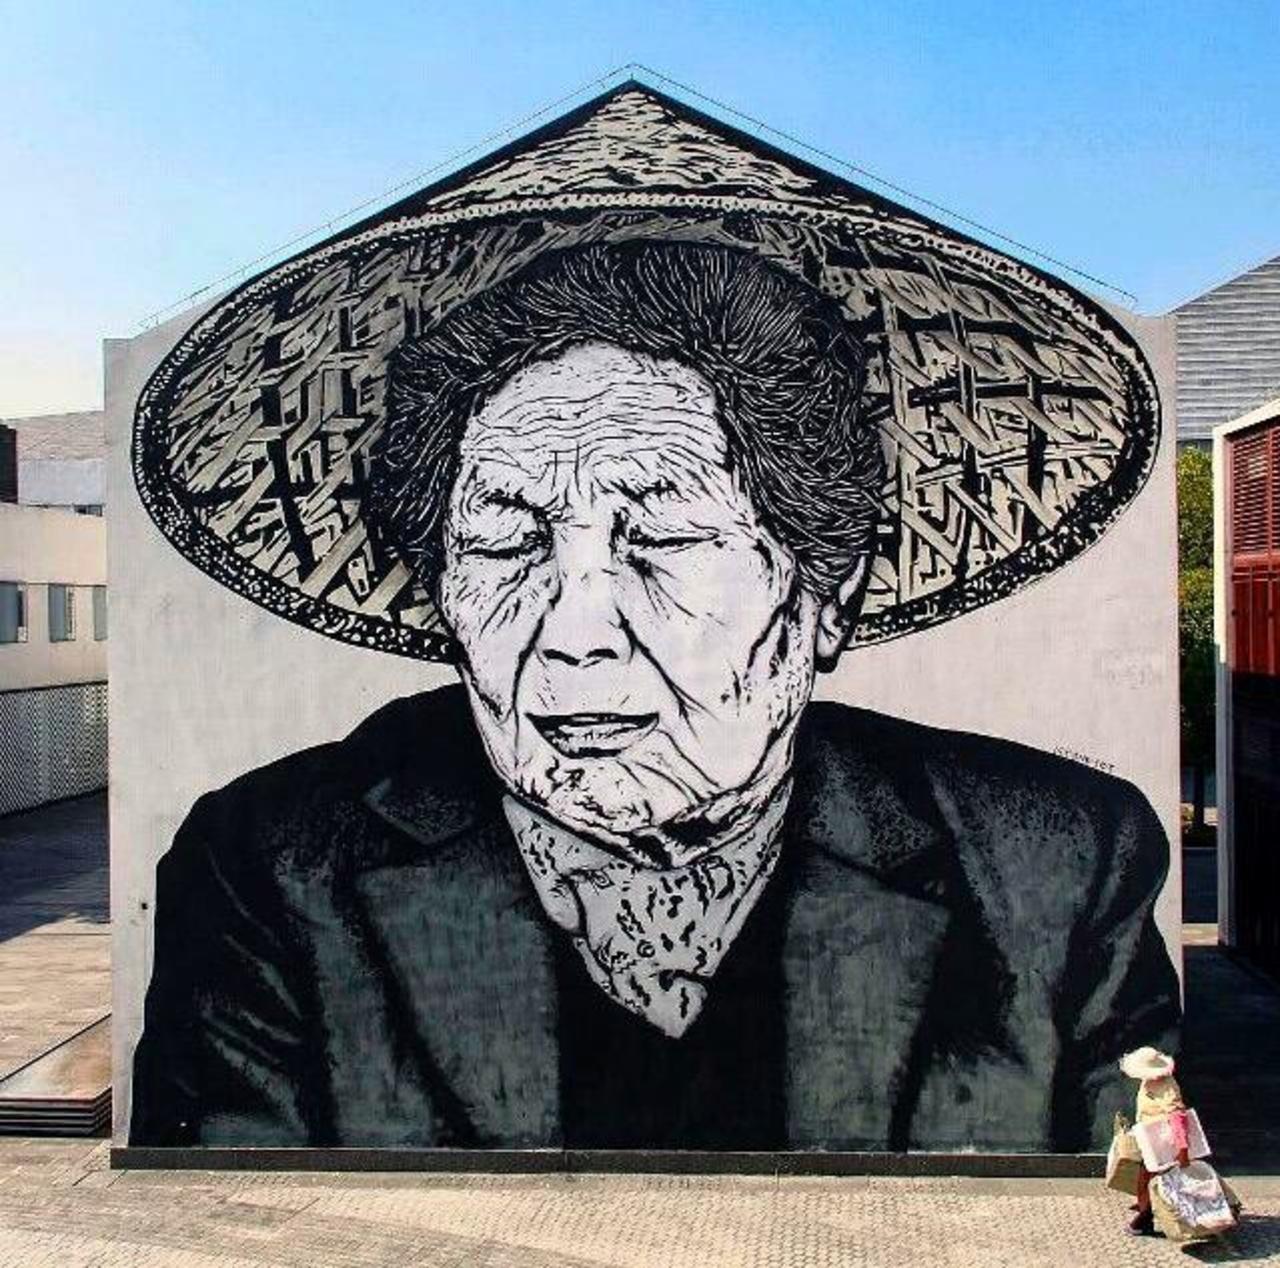 New Street Art by icy&sot in Shanghai  

#art #graffiti #mural #streetart http://t.co/YWmlp0lyHu